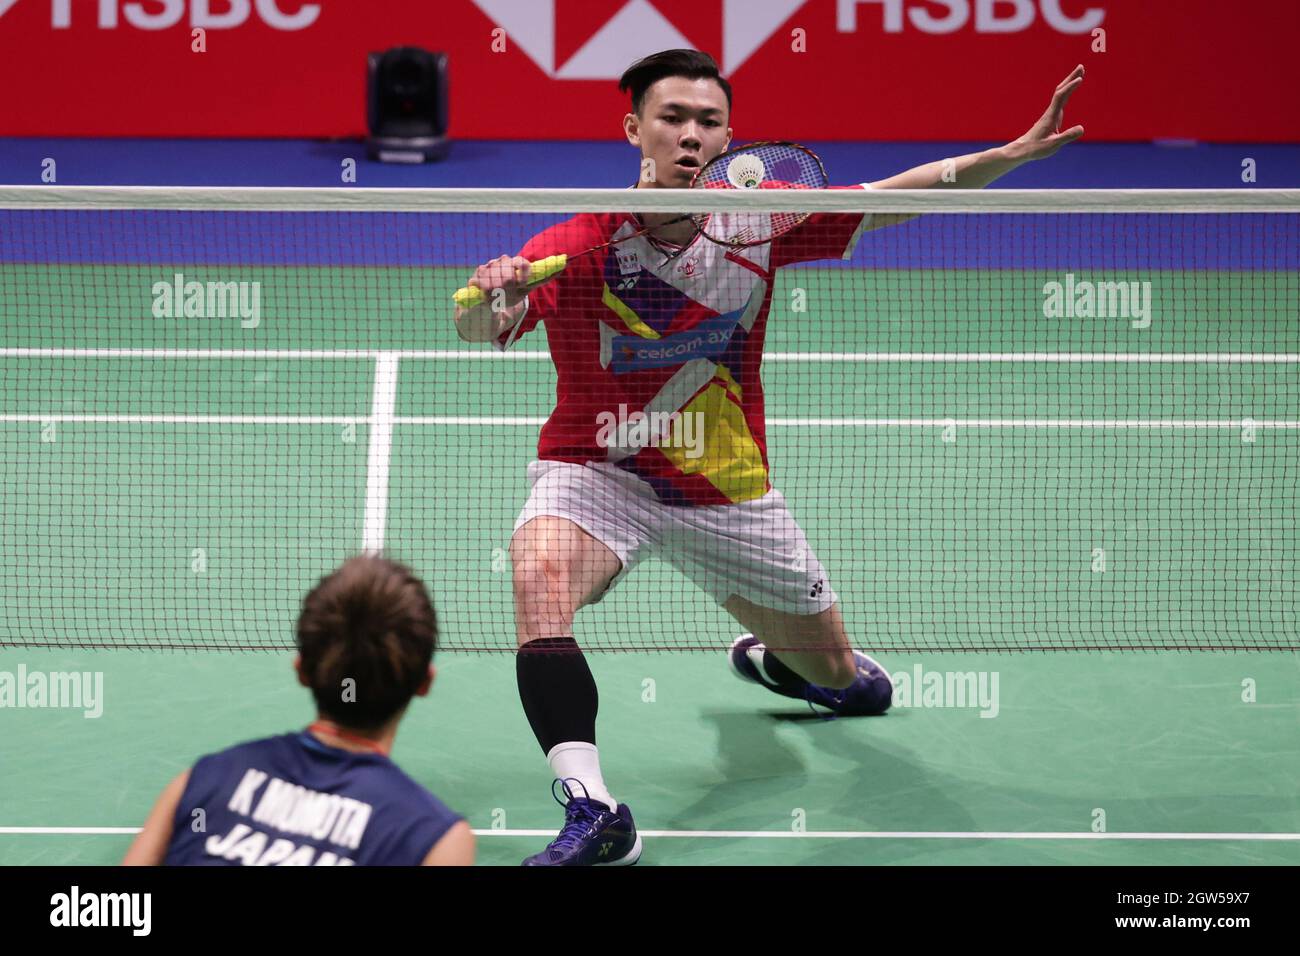 Badminton malaysia vs japan